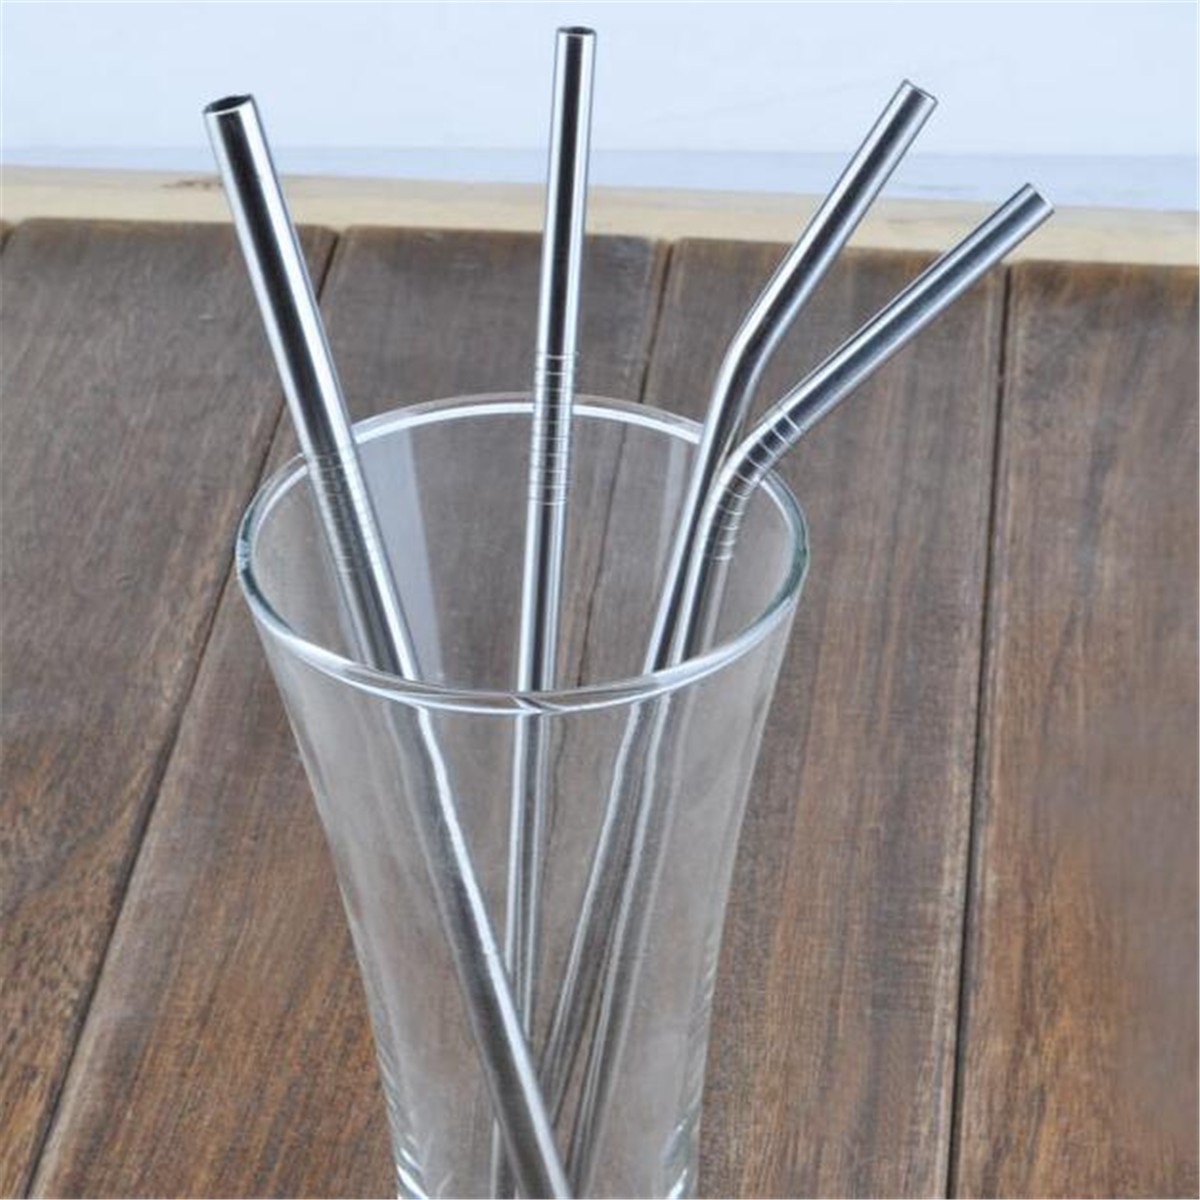 Stainless-Steel-Straw-Ultra-Long-Reusable-Drinking-Metal-Straws-Kit-BentStraight-1311598-3